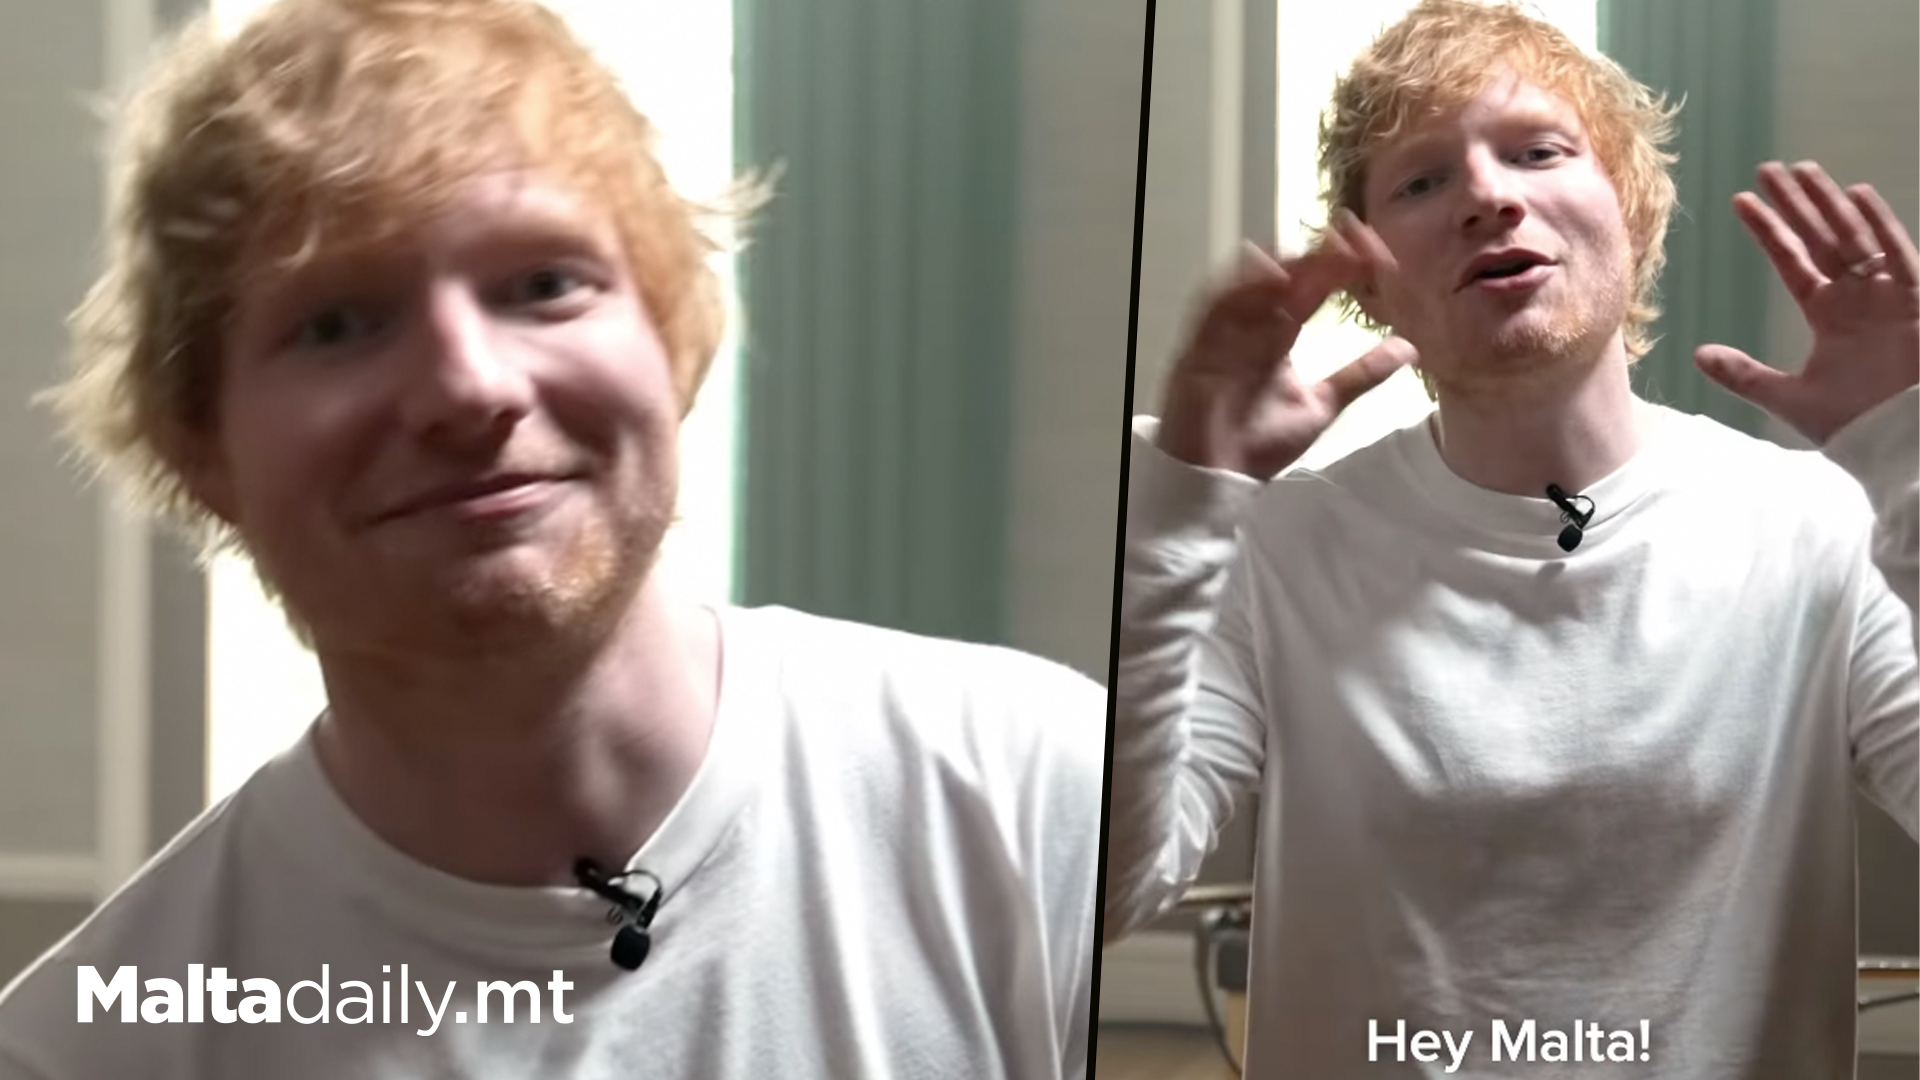 Ed Sheeran Sends Message Ahead Of Malta Concert